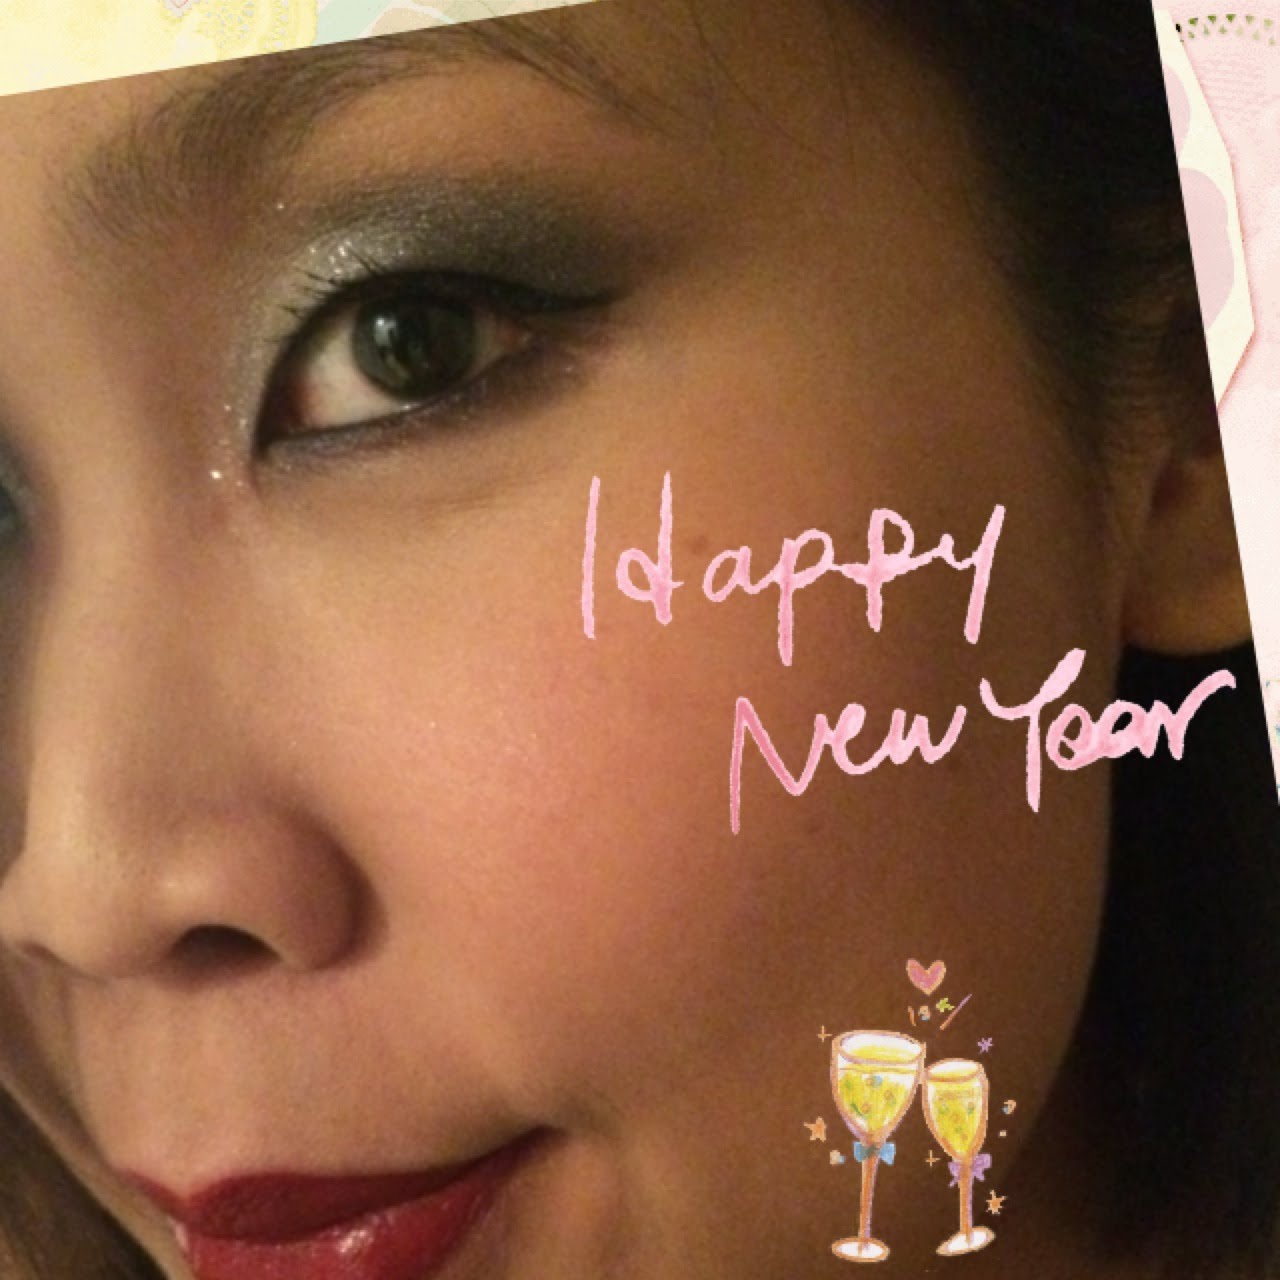 [化妝] 新年之邪惡妝 New Year’s Eve Naughty Makeup Look